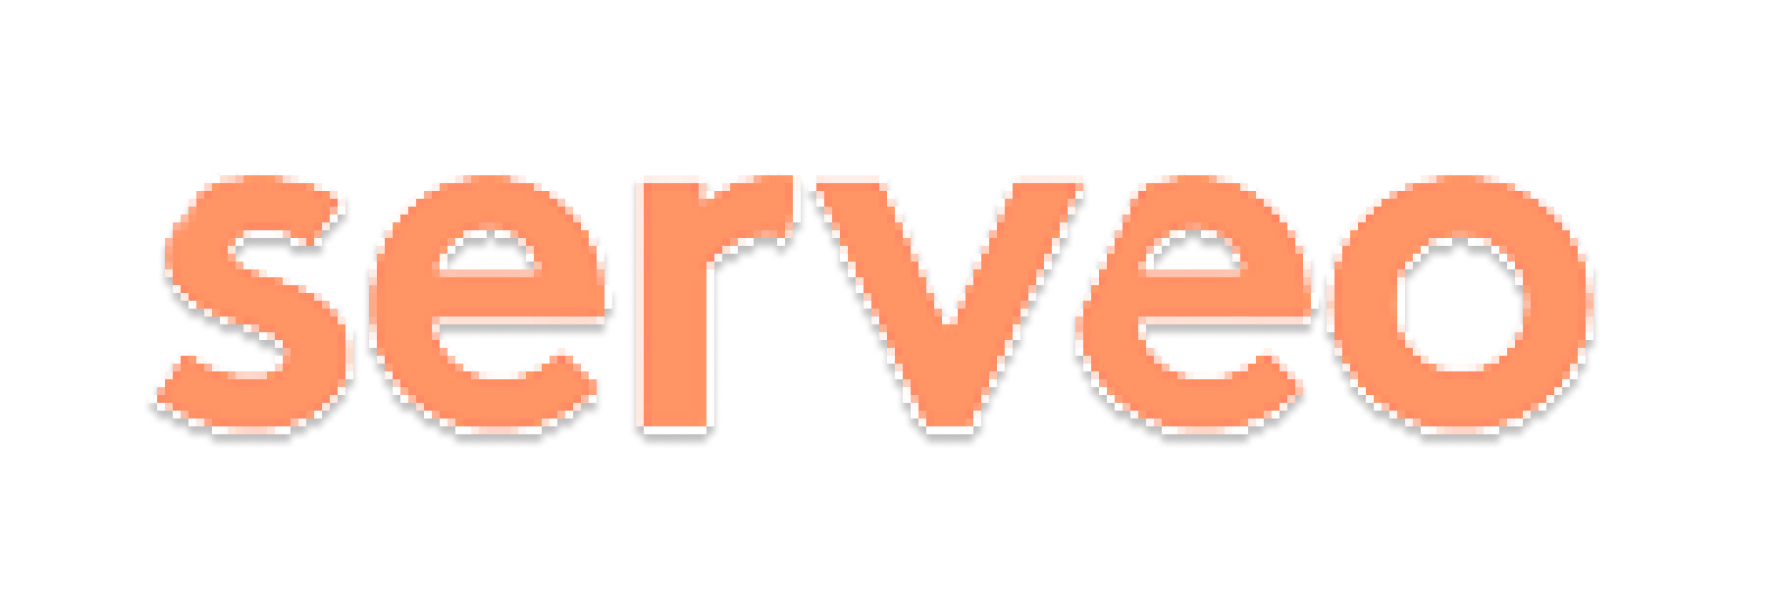 serveo-removebg-preview